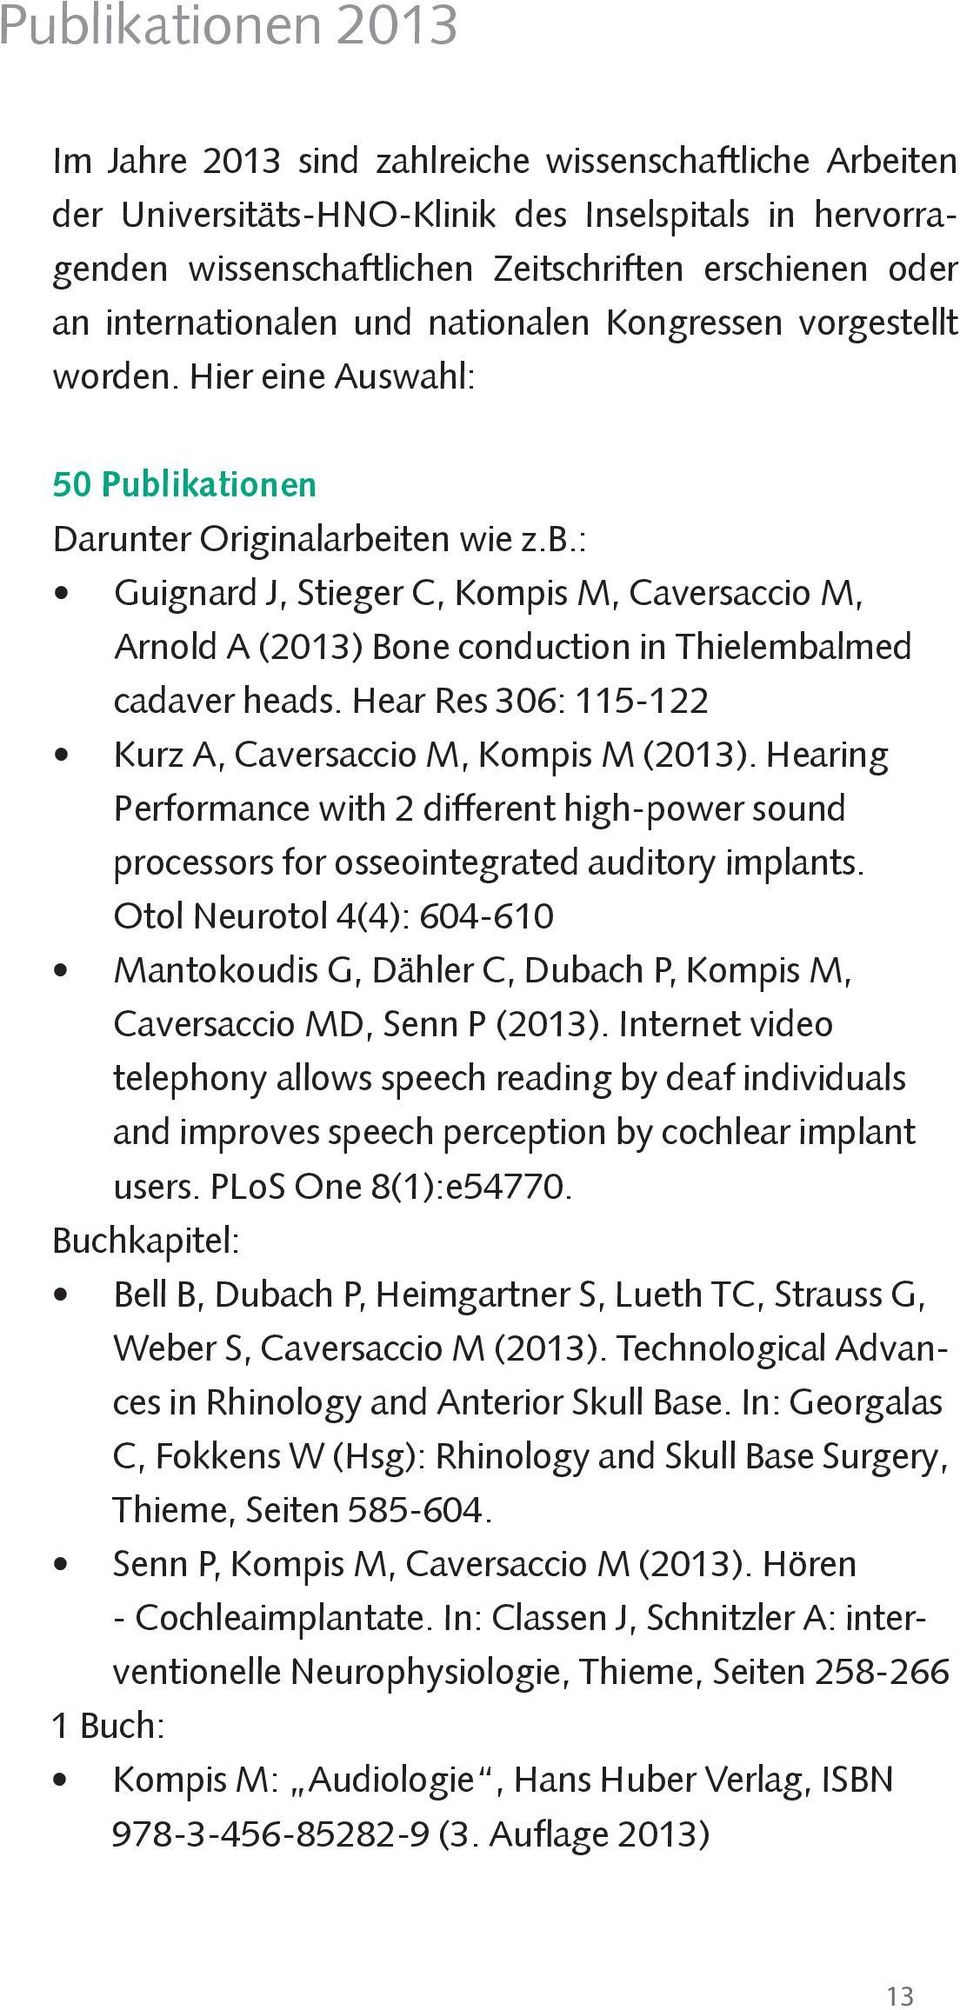 ikationen Darunter Originalarbeiten wie z.b.: Guignard J, Stieger C, Kompis M, Caversaccio M, Arnold A (2013) Bone conduction in Thielembalmed cadaver heads.